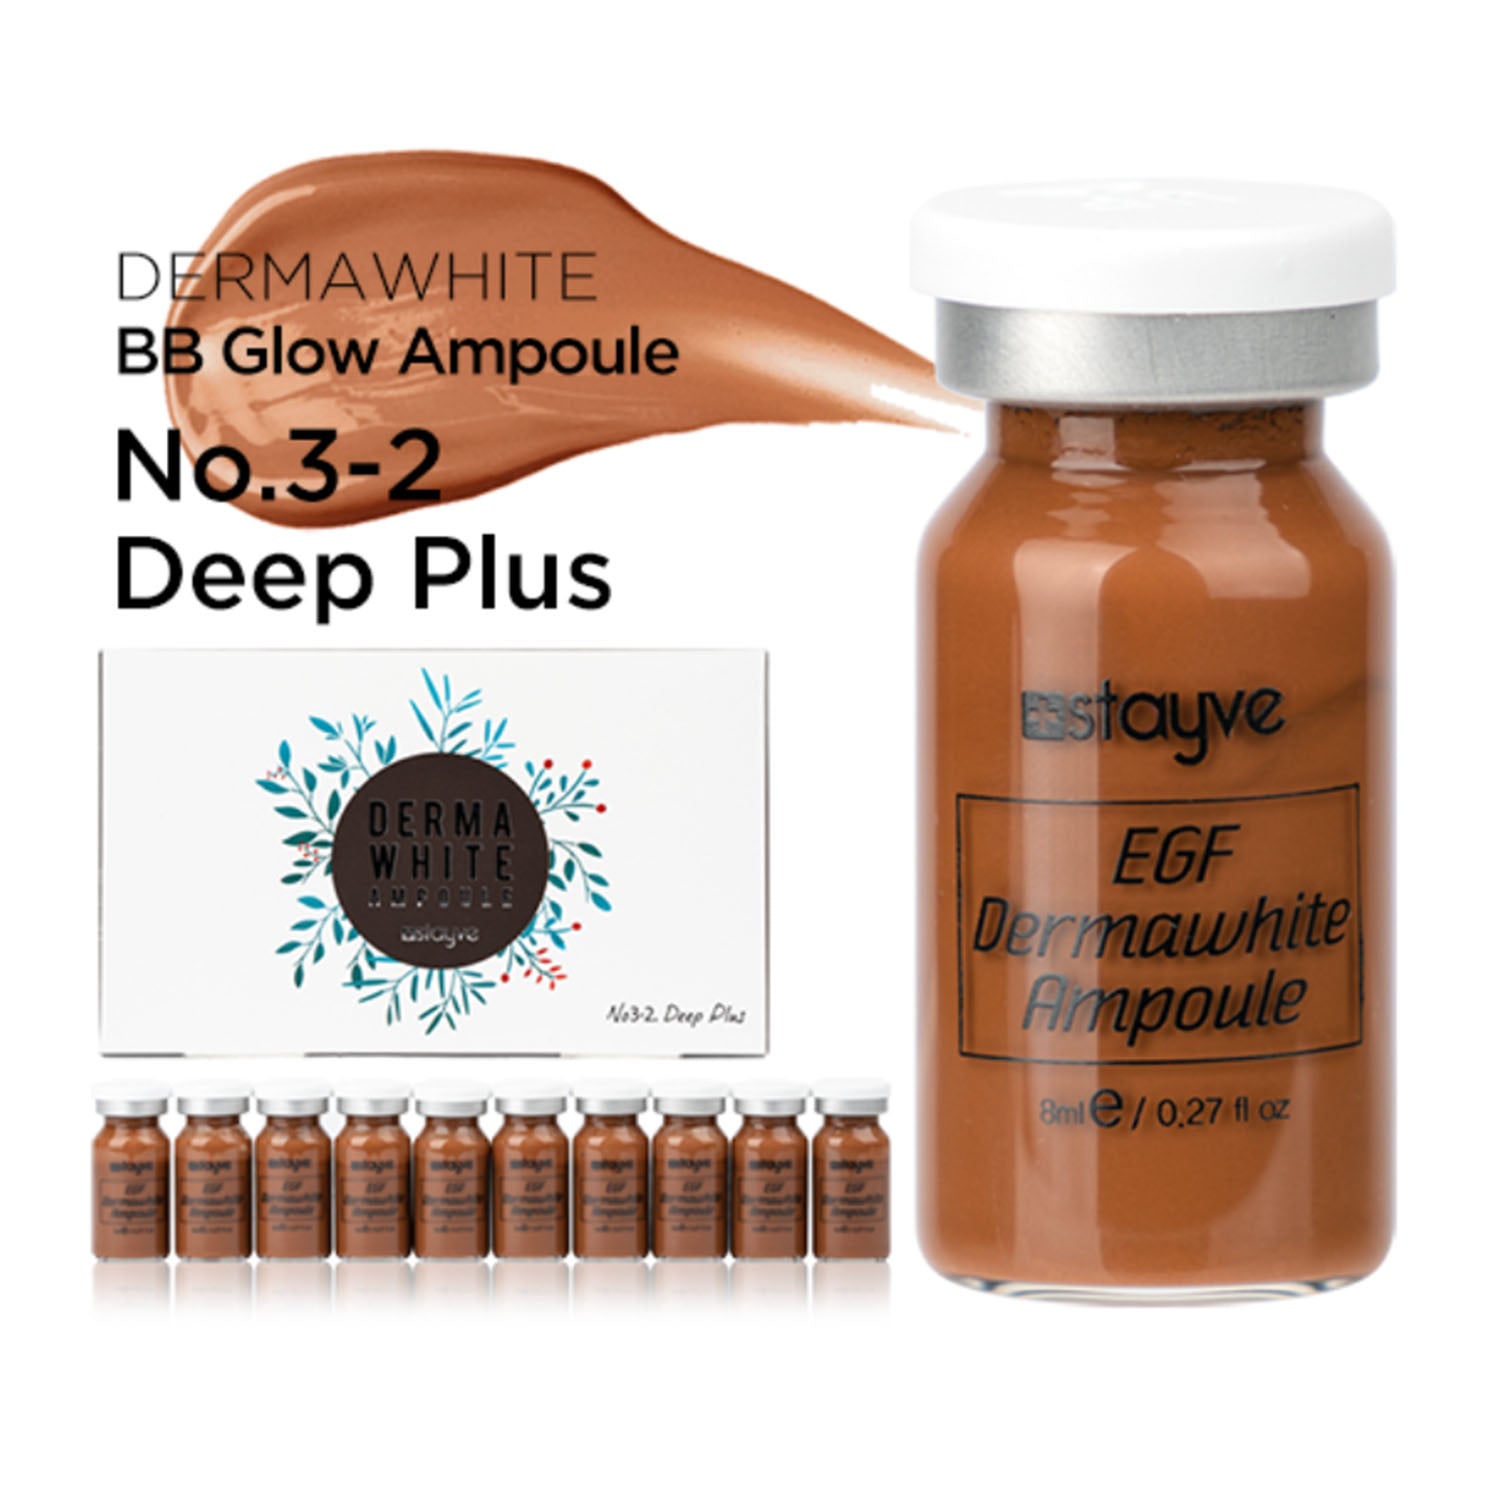 Stayve BB Glow EGF Dermawhite Ampoule Serum NO. 3-2 (Deep Plus) x 10